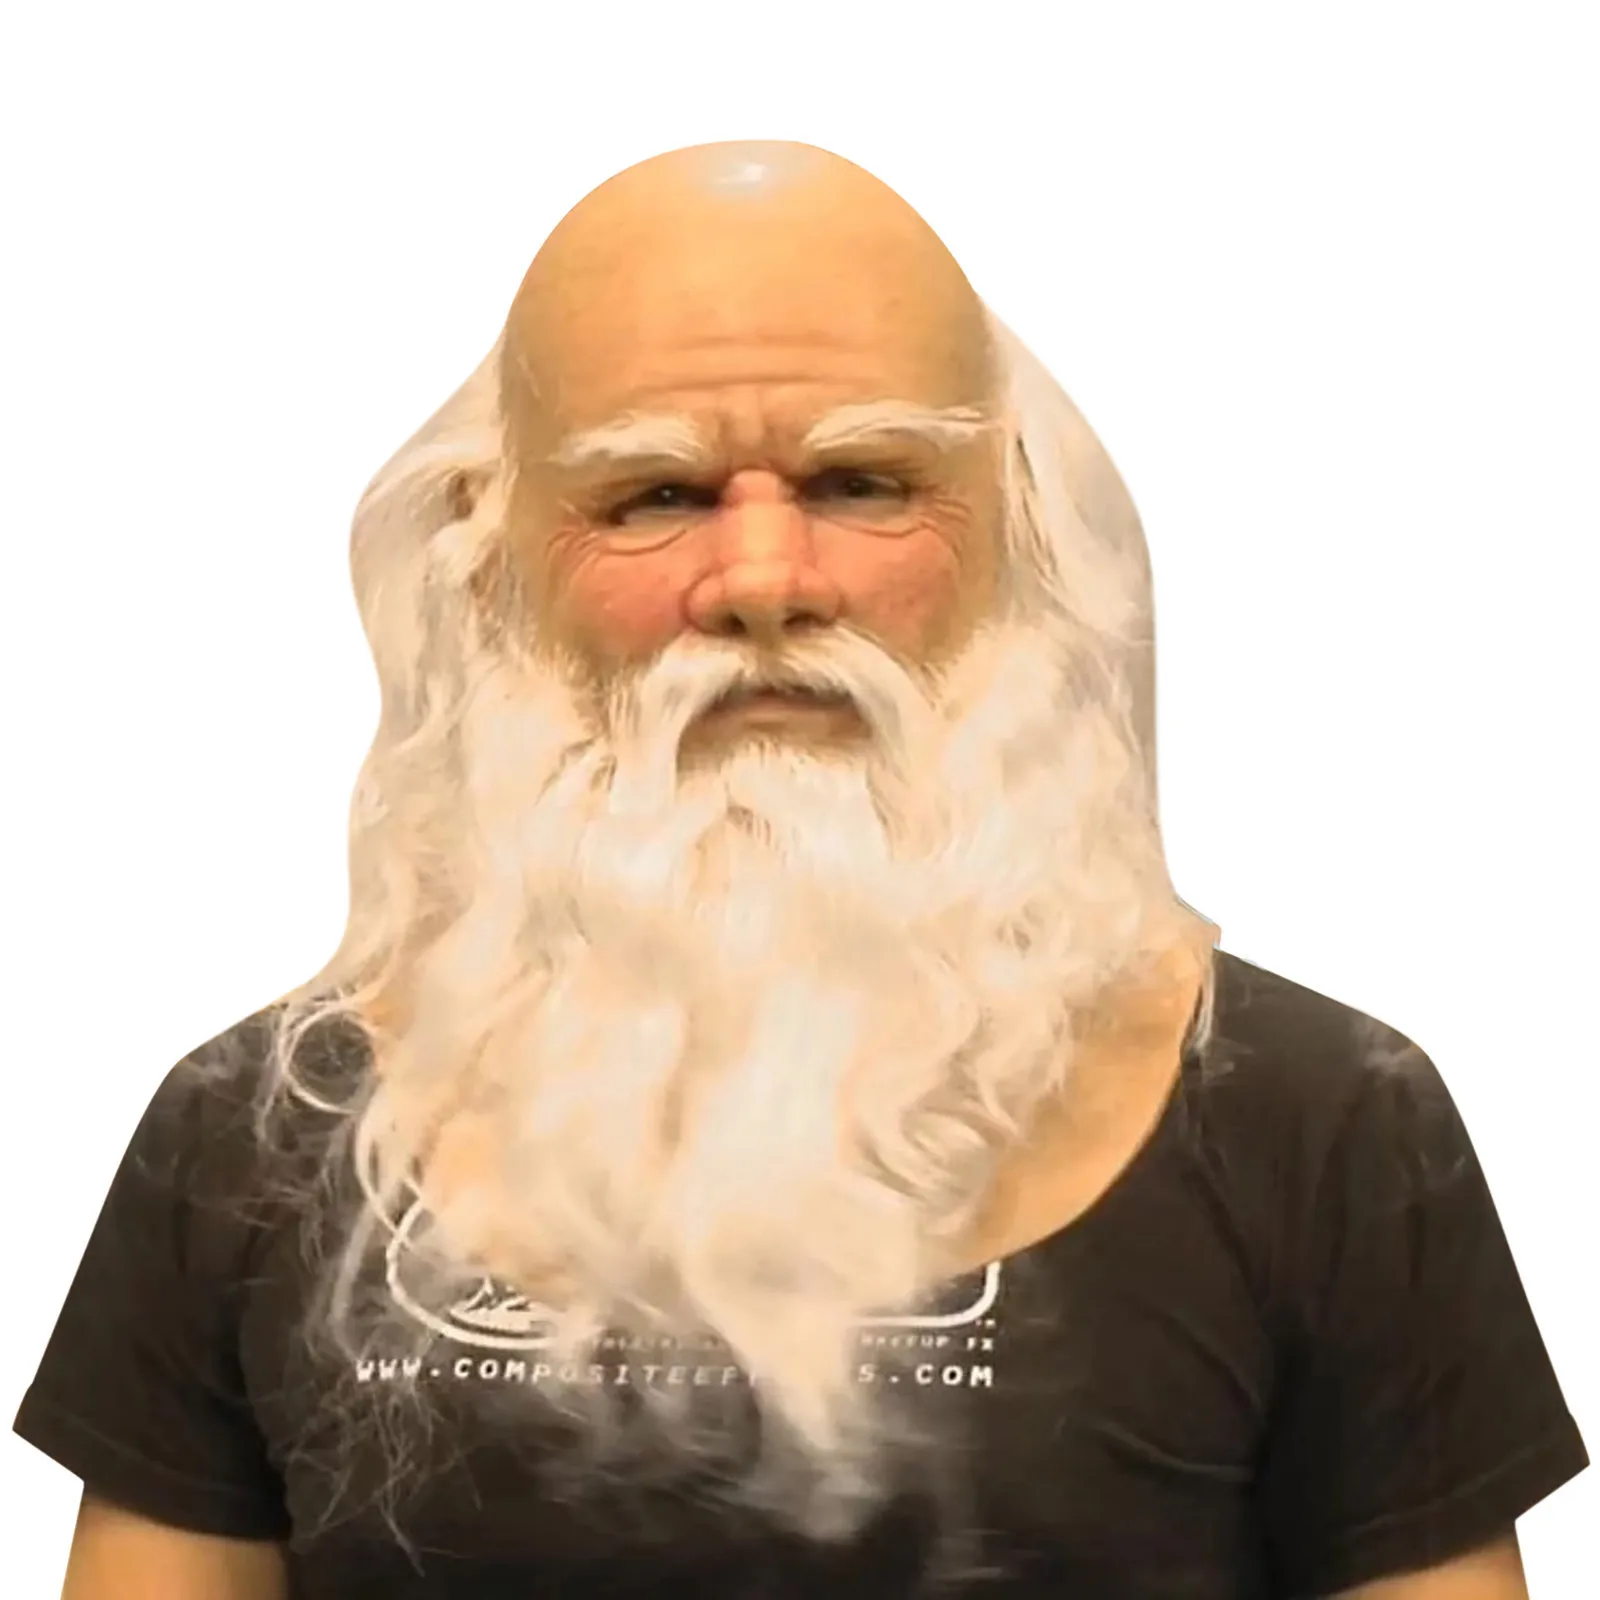 

White Hair Beard Santa Claus Mask Funny Mask Super Soft Latex Mask Headgear Cosplay Old Man Performance Props Halloween Masks